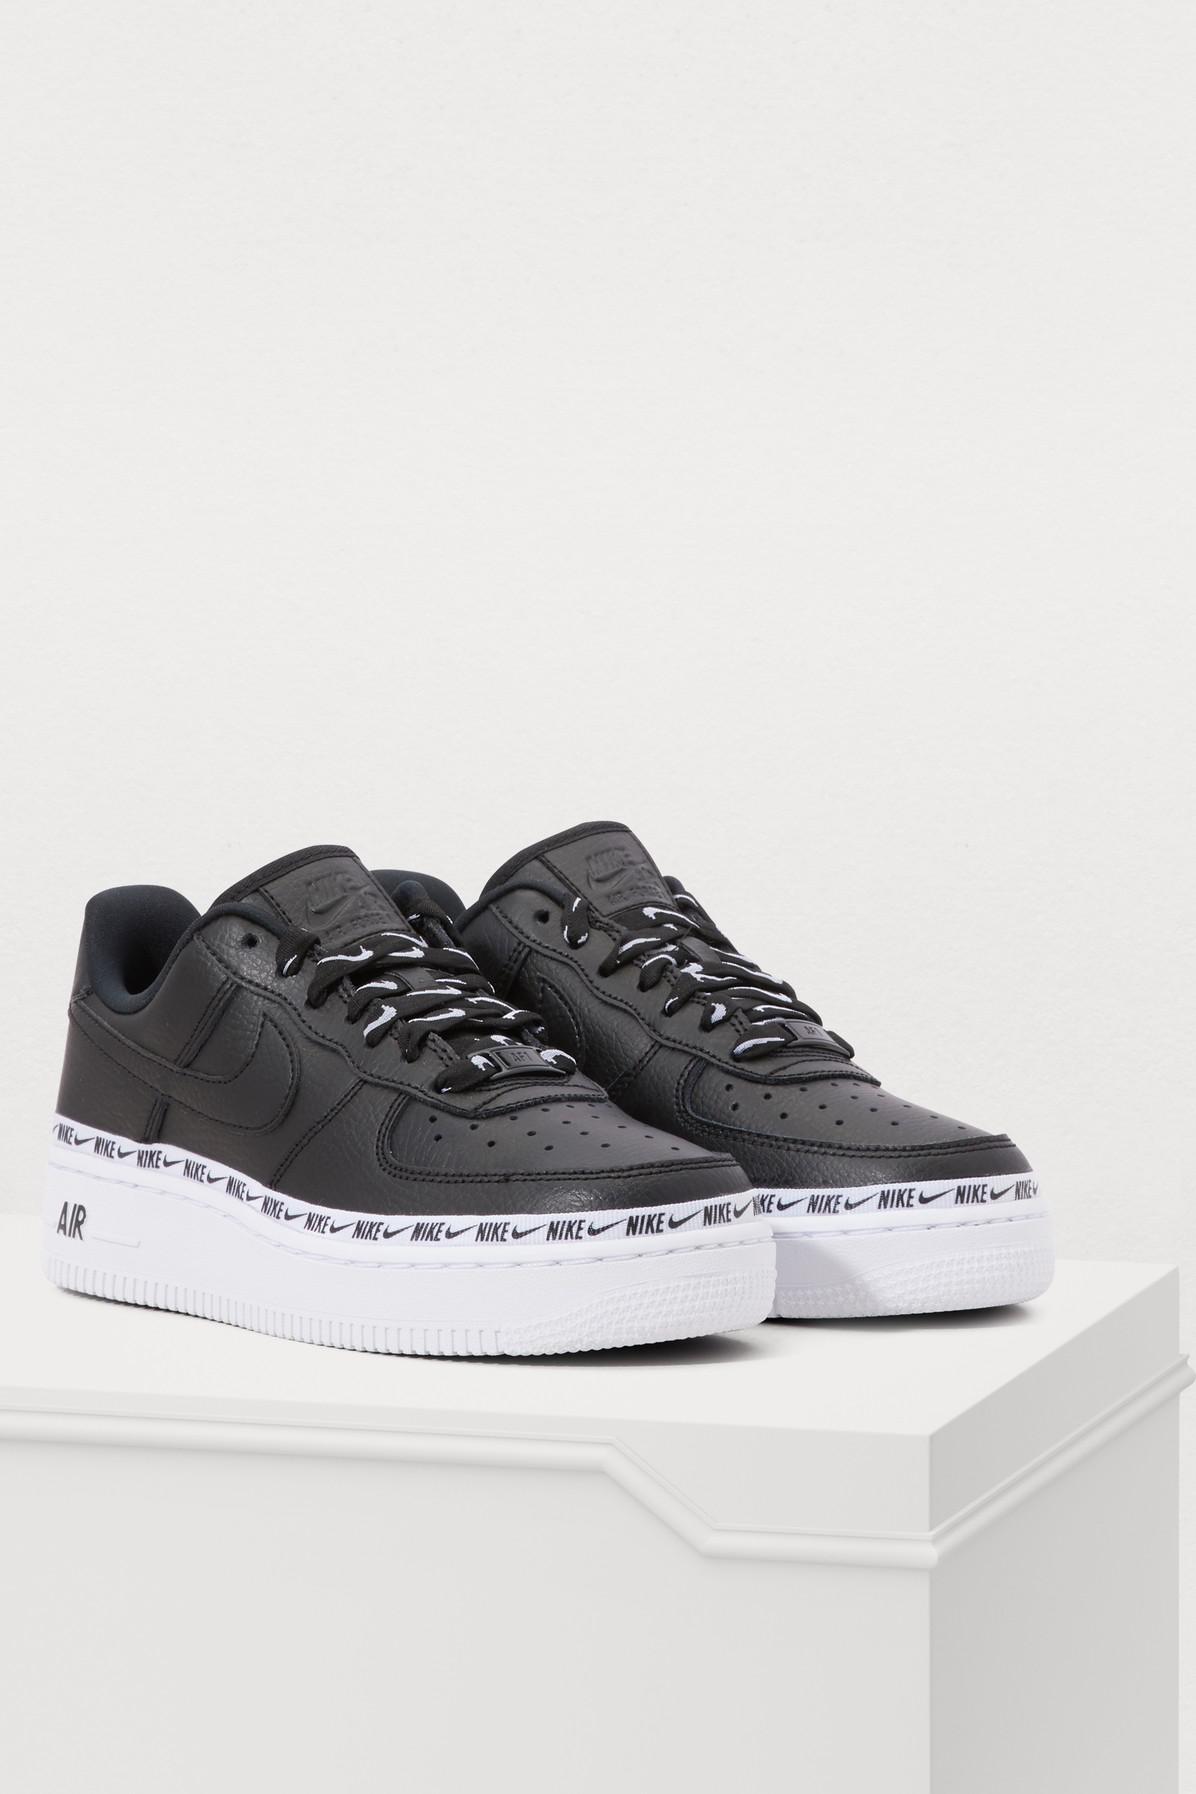 Nike Air Force 1 07 Se Prm Sneakers in Black/Black-White (Black) | Lyst